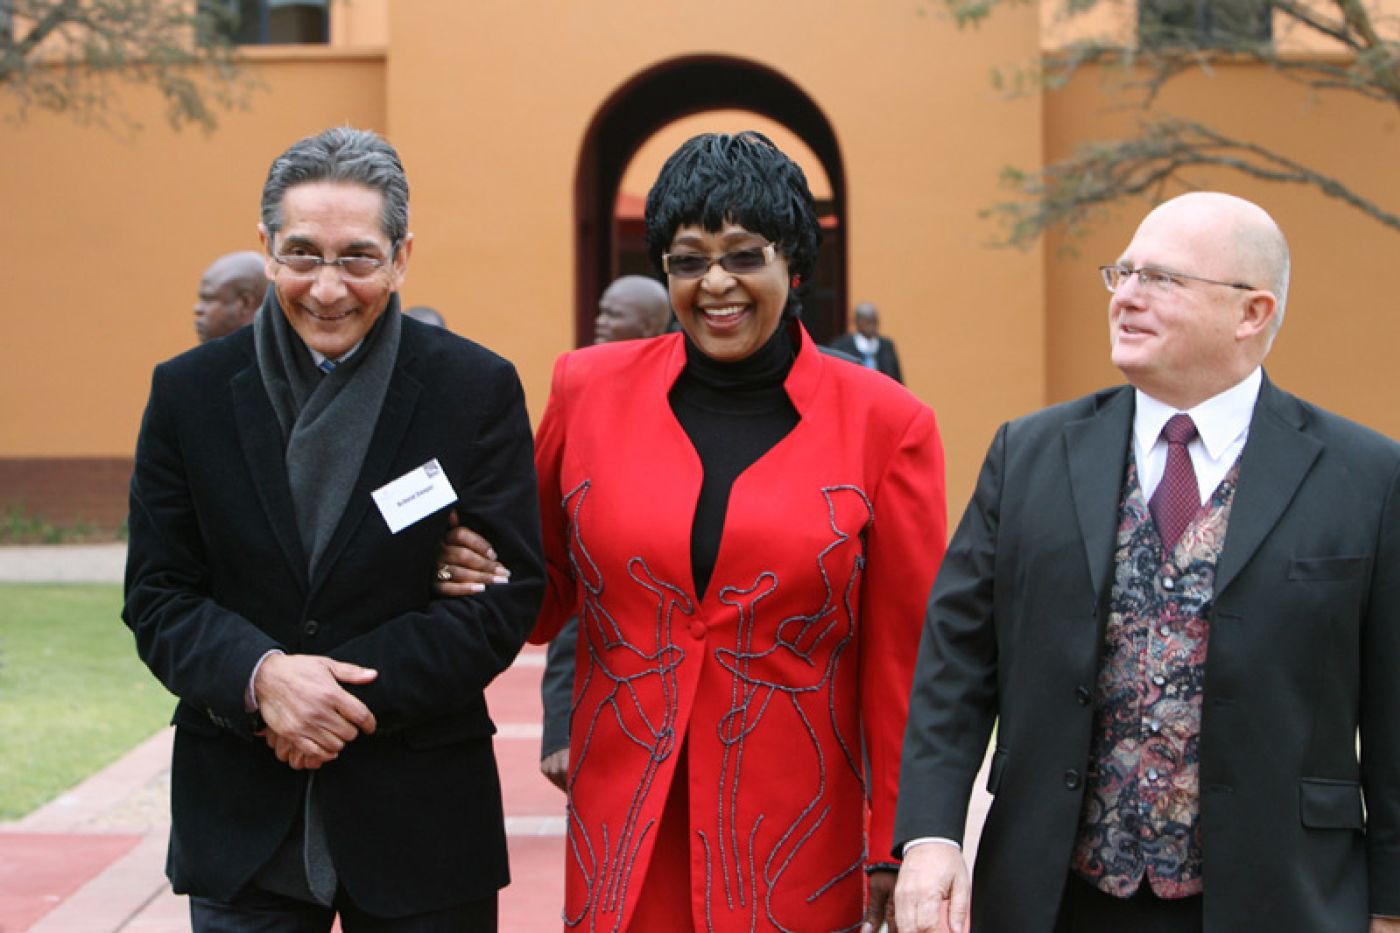 Achmat Dangor, CEO of the Nelson Mandela Foundation, with Winnie Madikizela Mandela and Nick Binedell